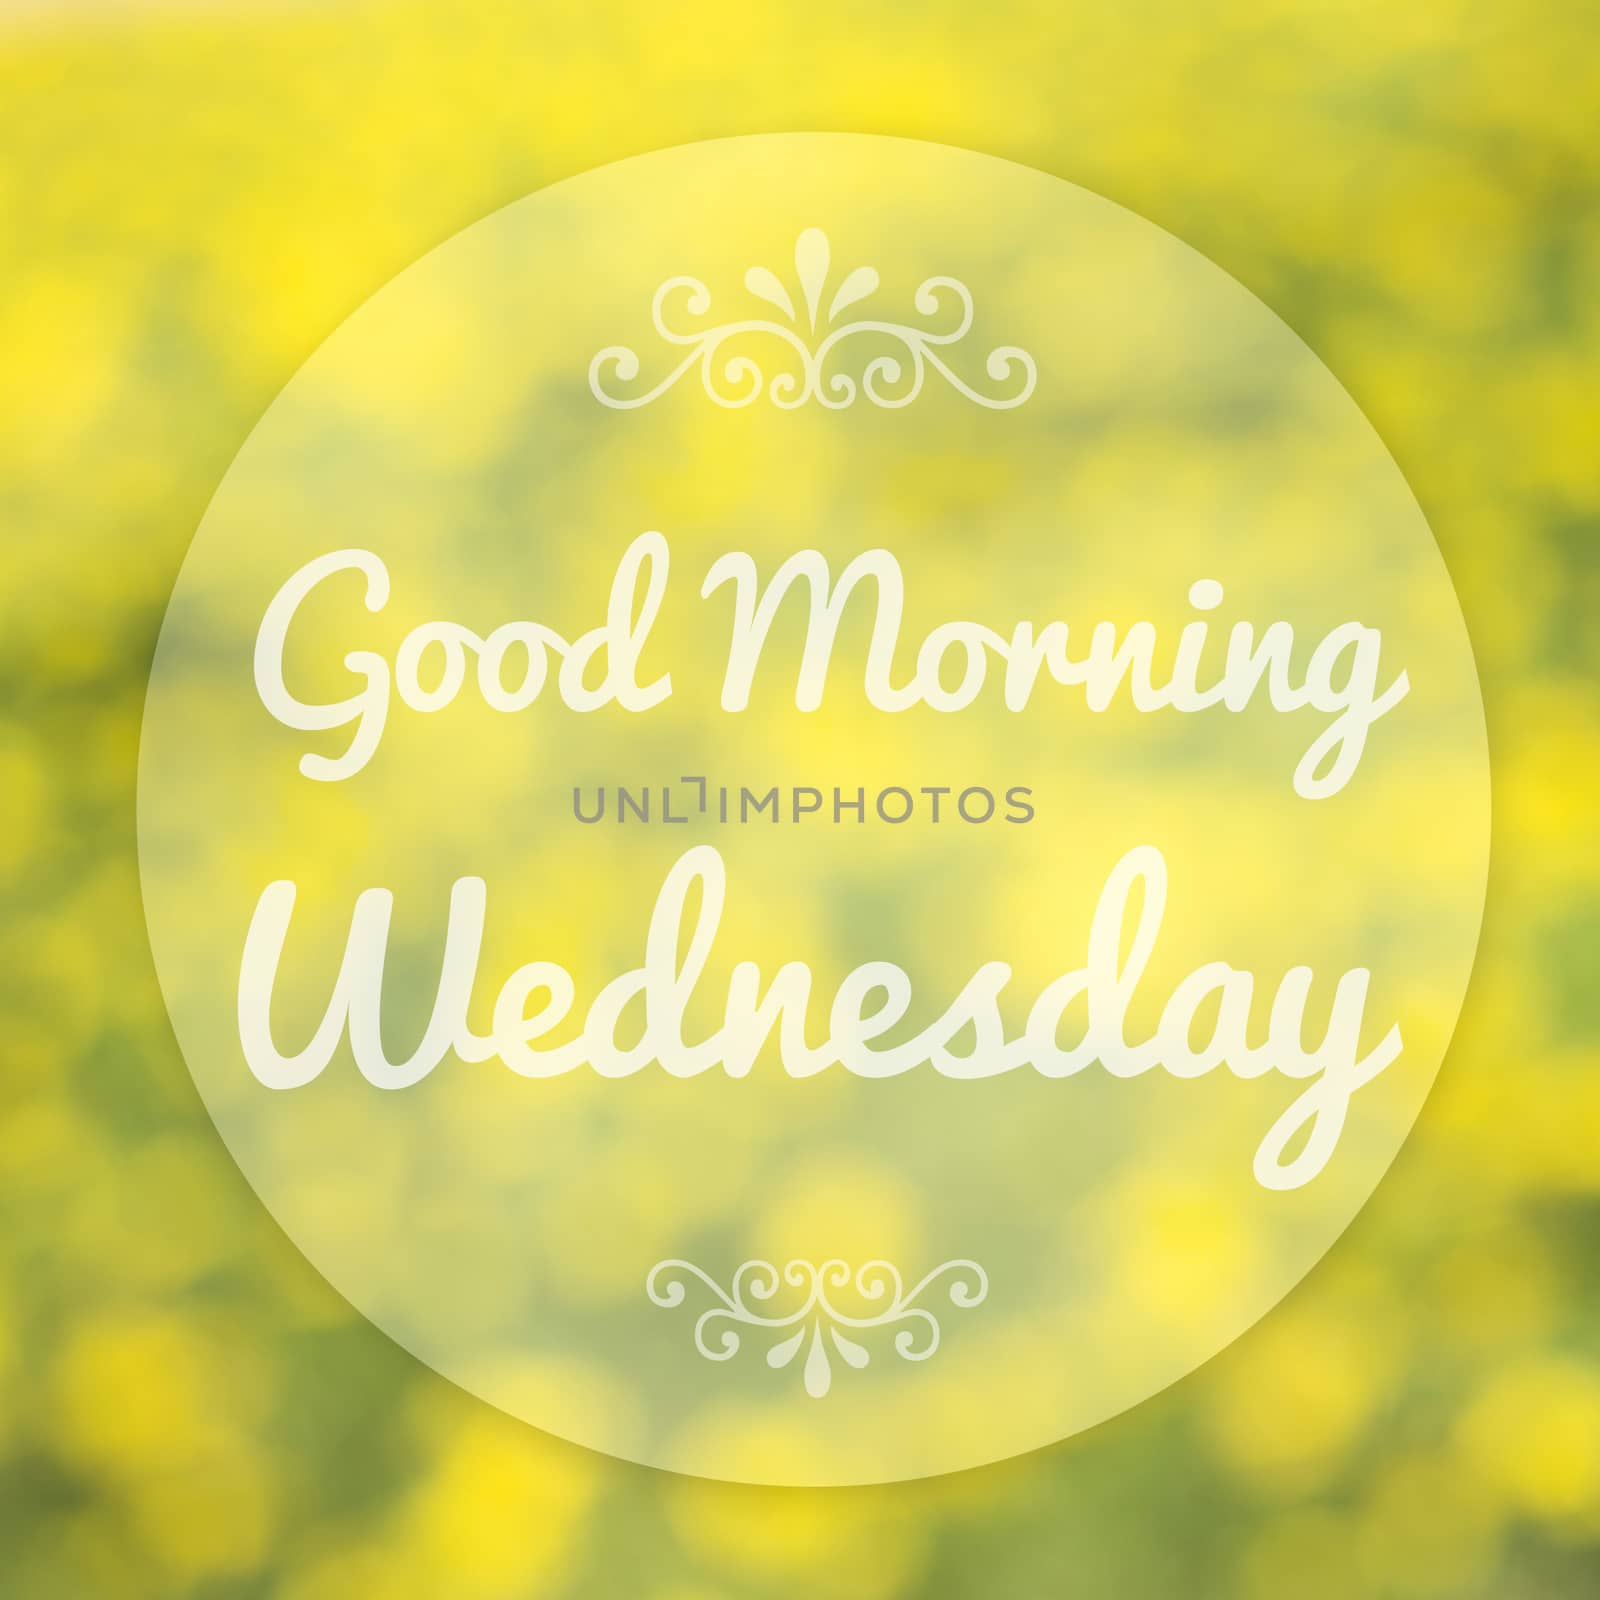 Good Morning Wednesday on blur background